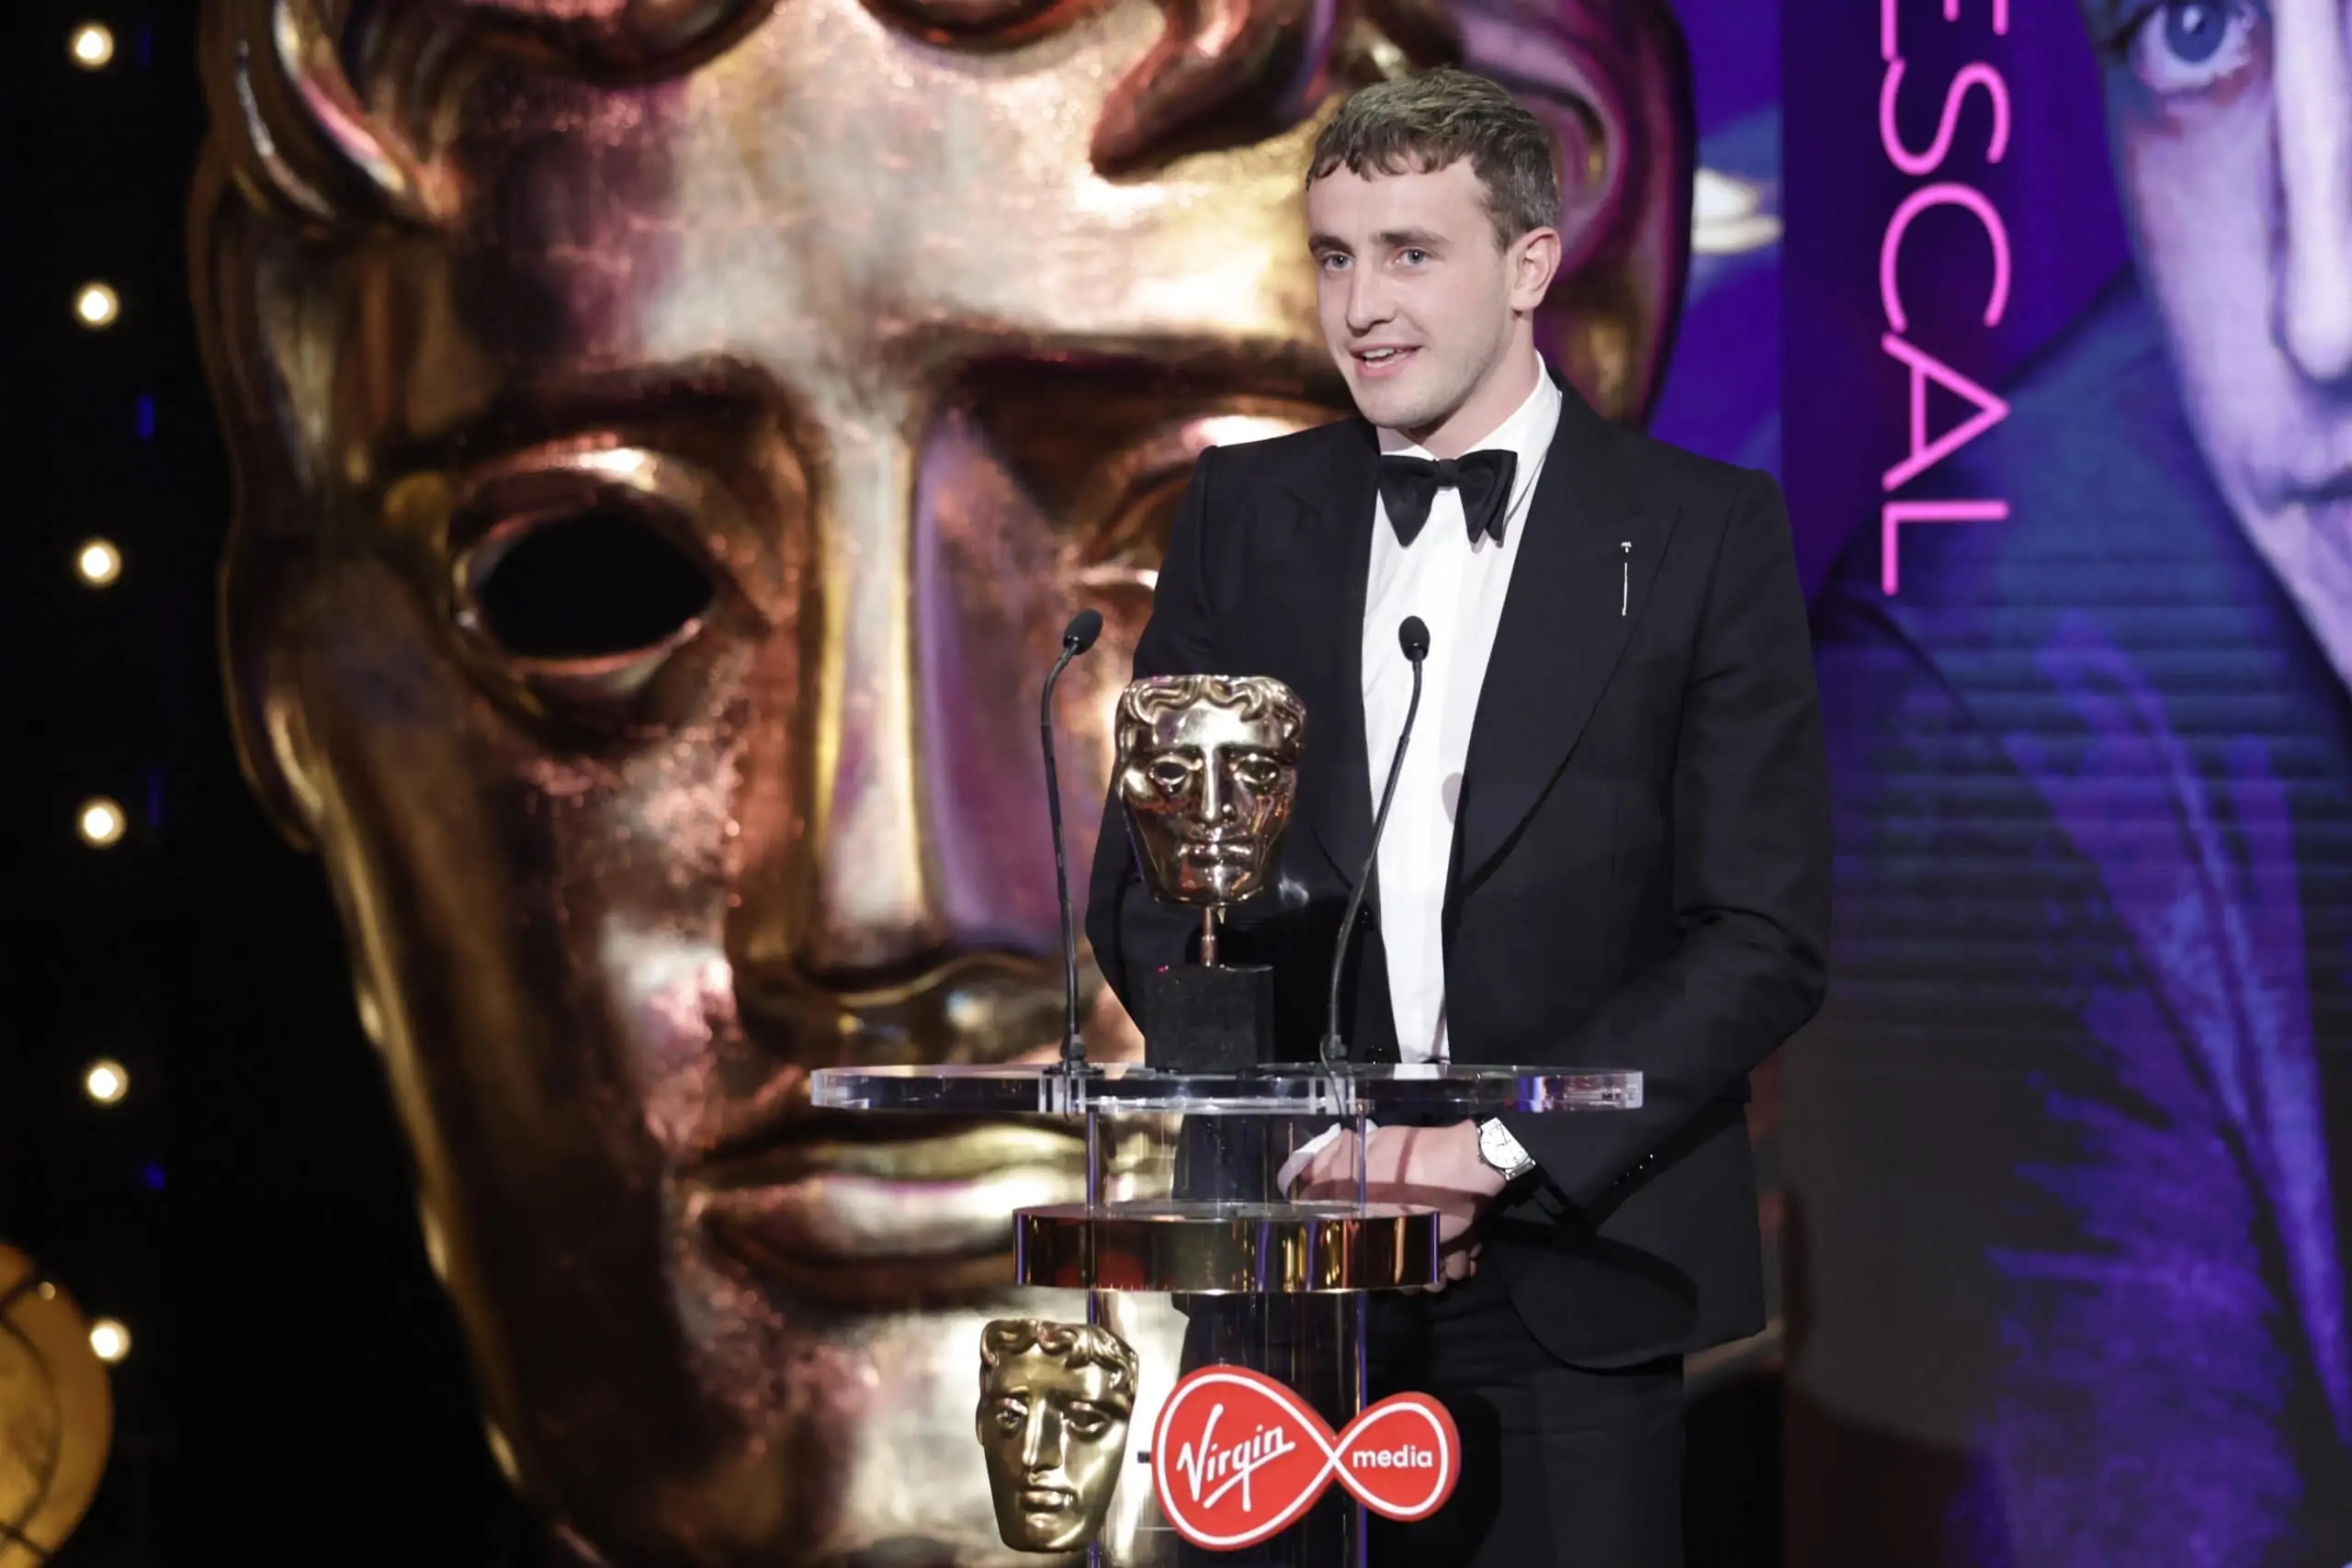 BAFTA Games Awards 2019 winners announced